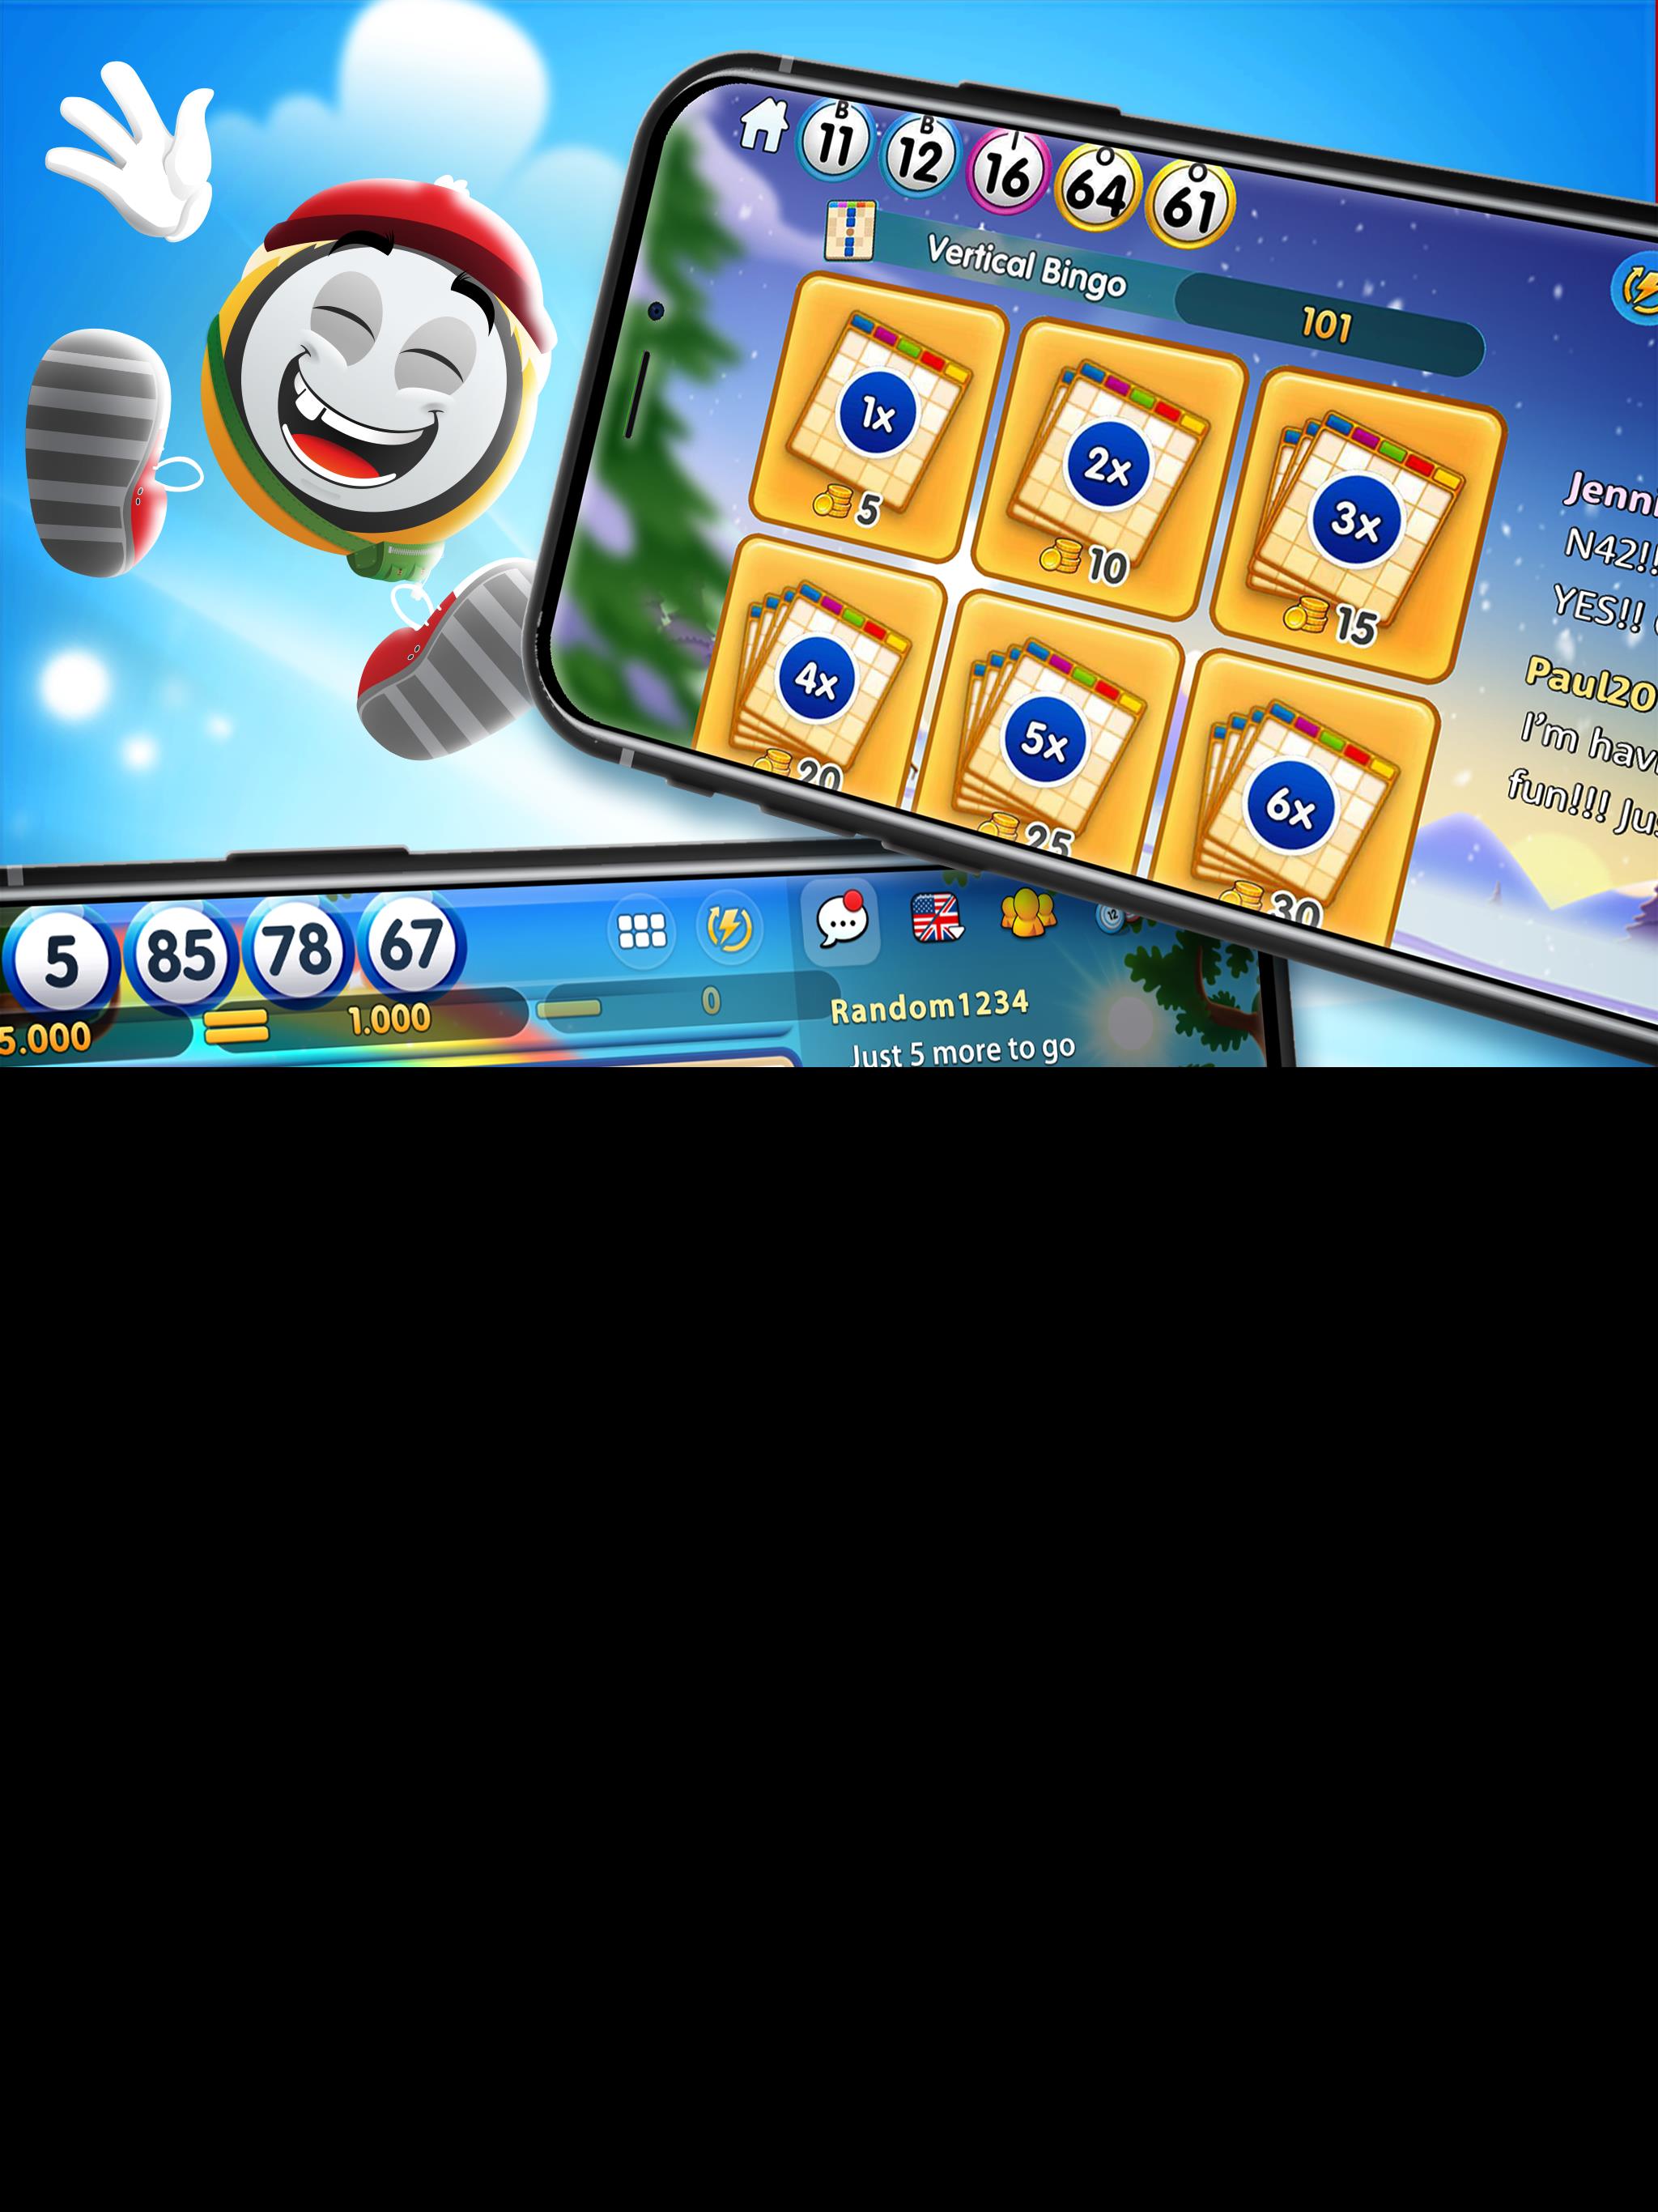 GamePoint Bingo - Bingo games Screenshot 11